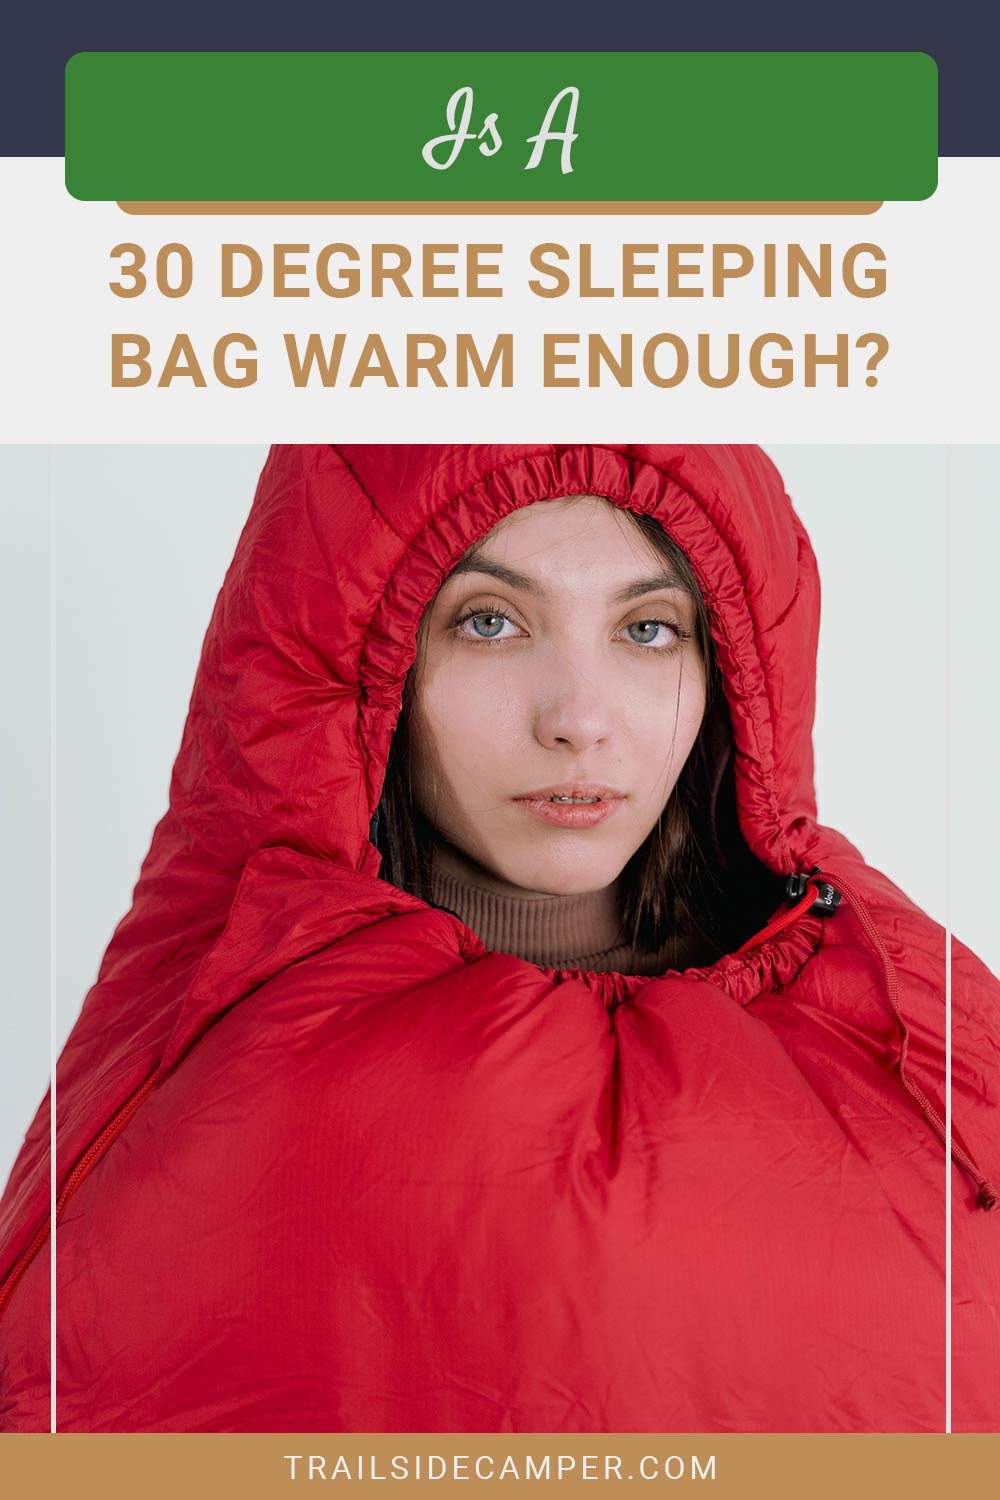 Is A 30 Degree Sleeping Bag Warm Enough?